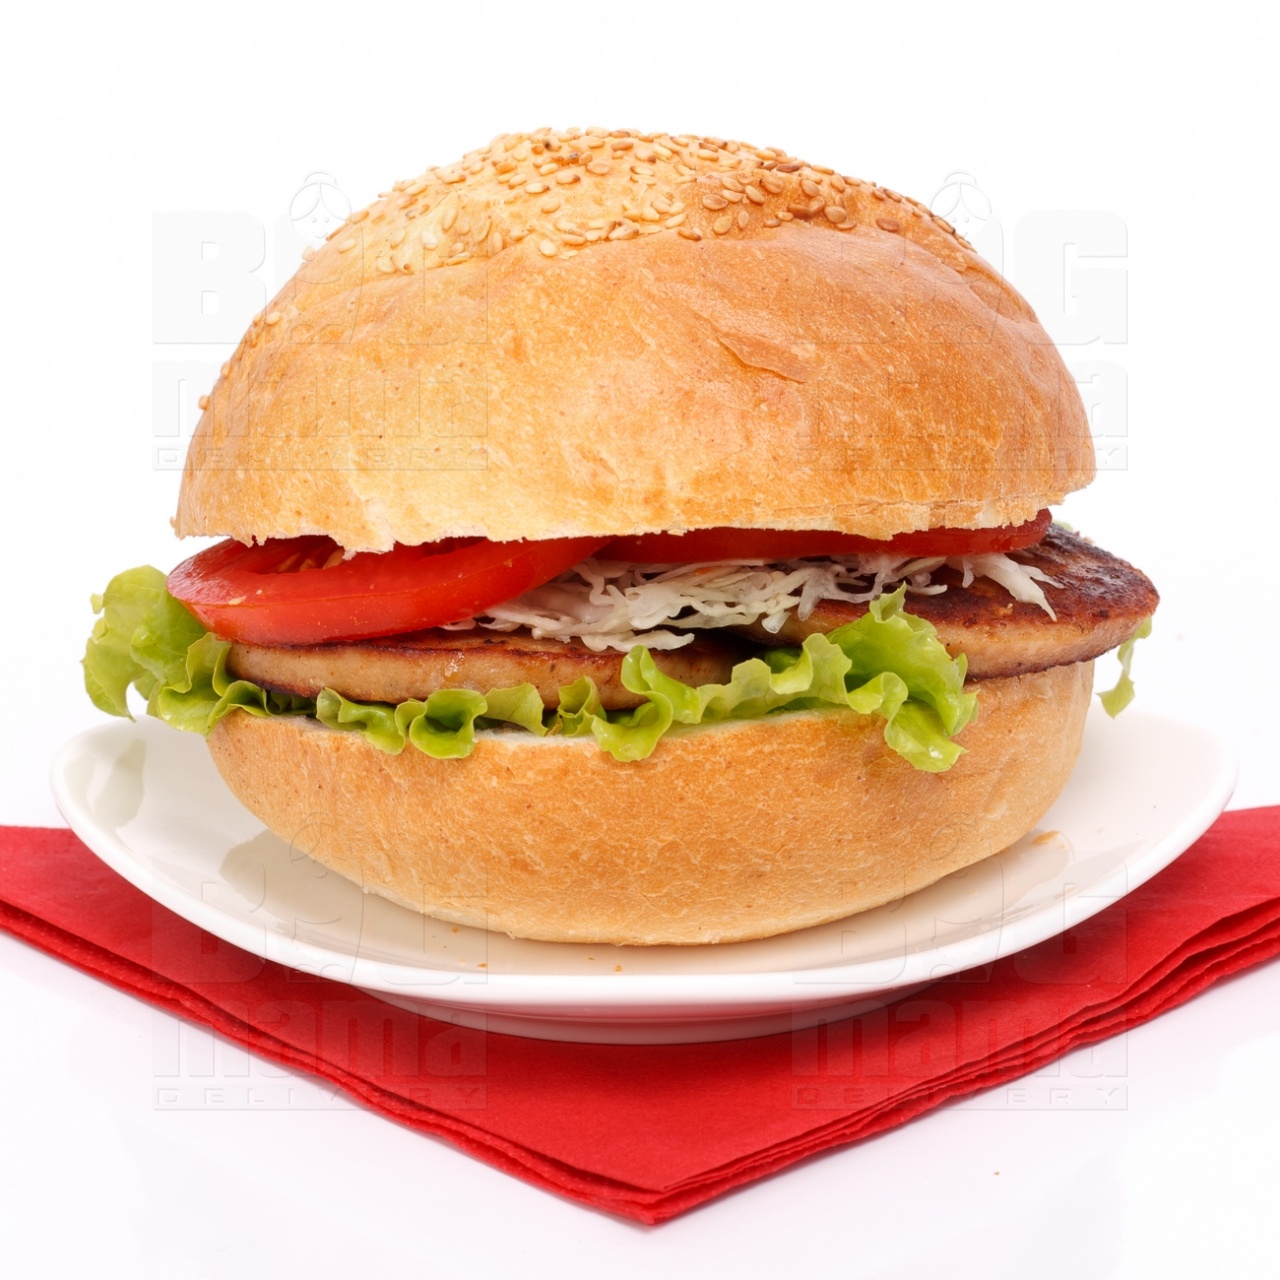 Product #49 image - Kis hamburger